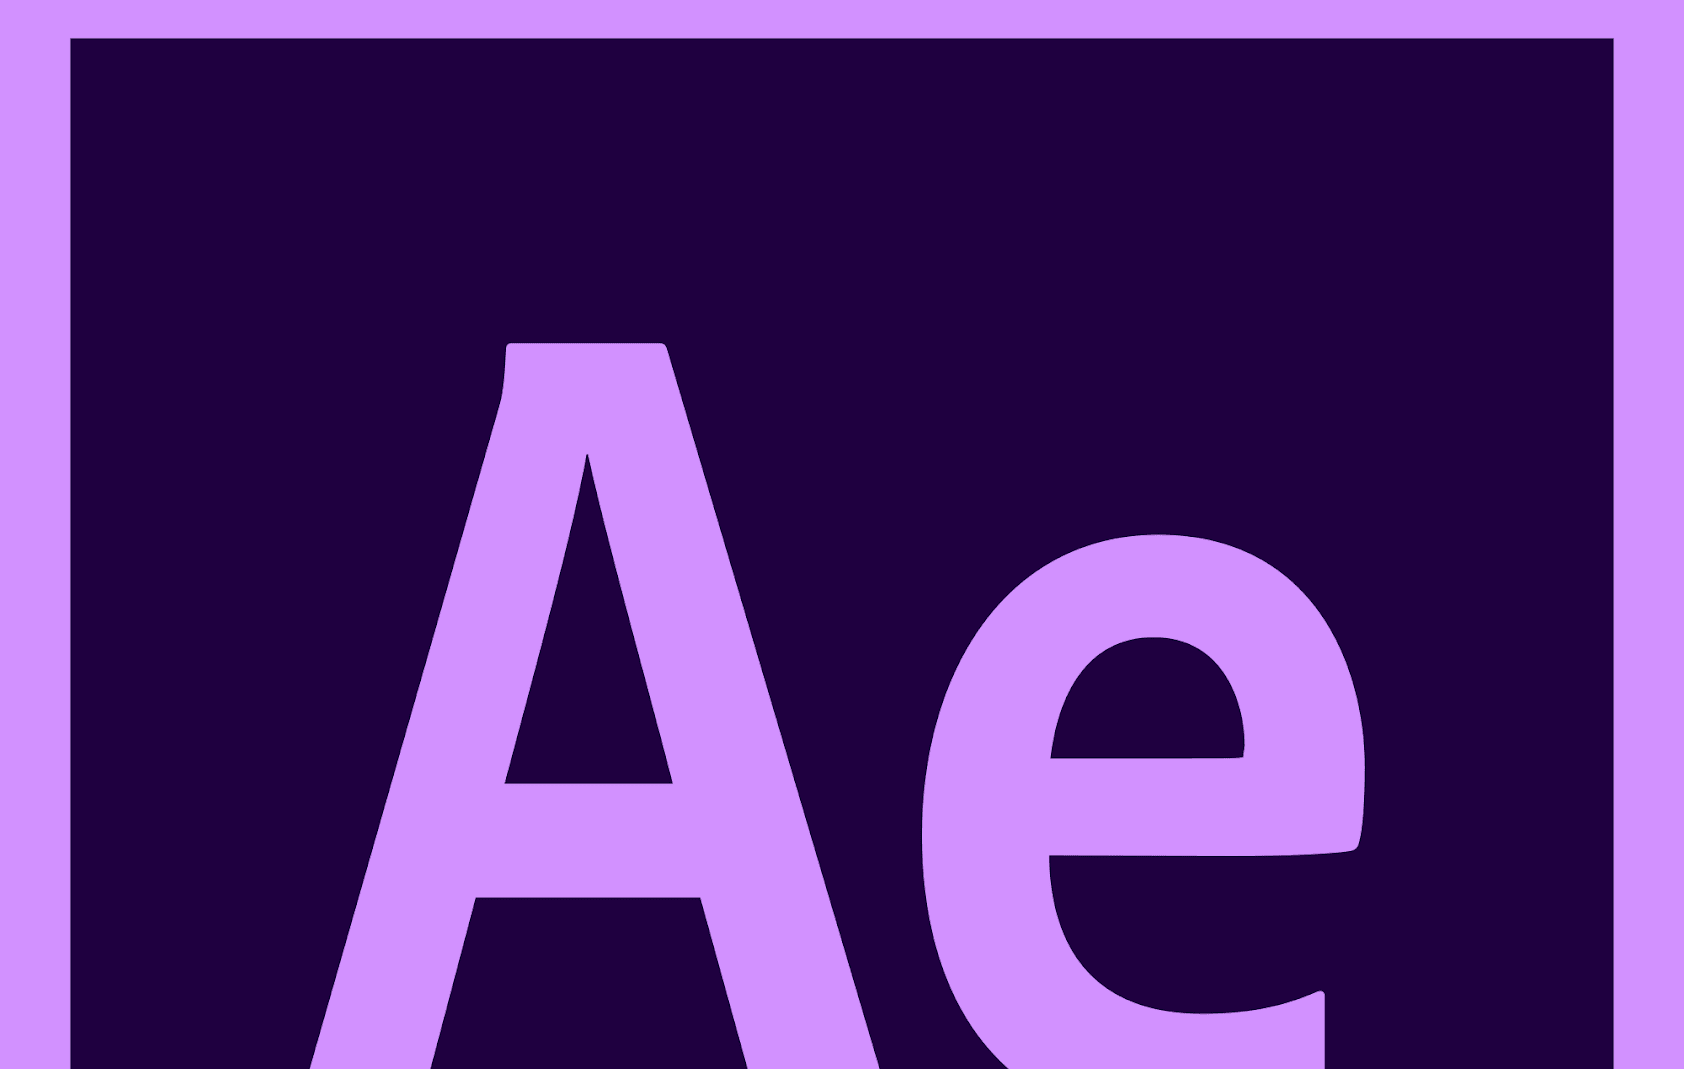 Adobe effects 2019. Adobe after Effects. Adobe after Effects logo. Адобе эффект. Логотип ае.